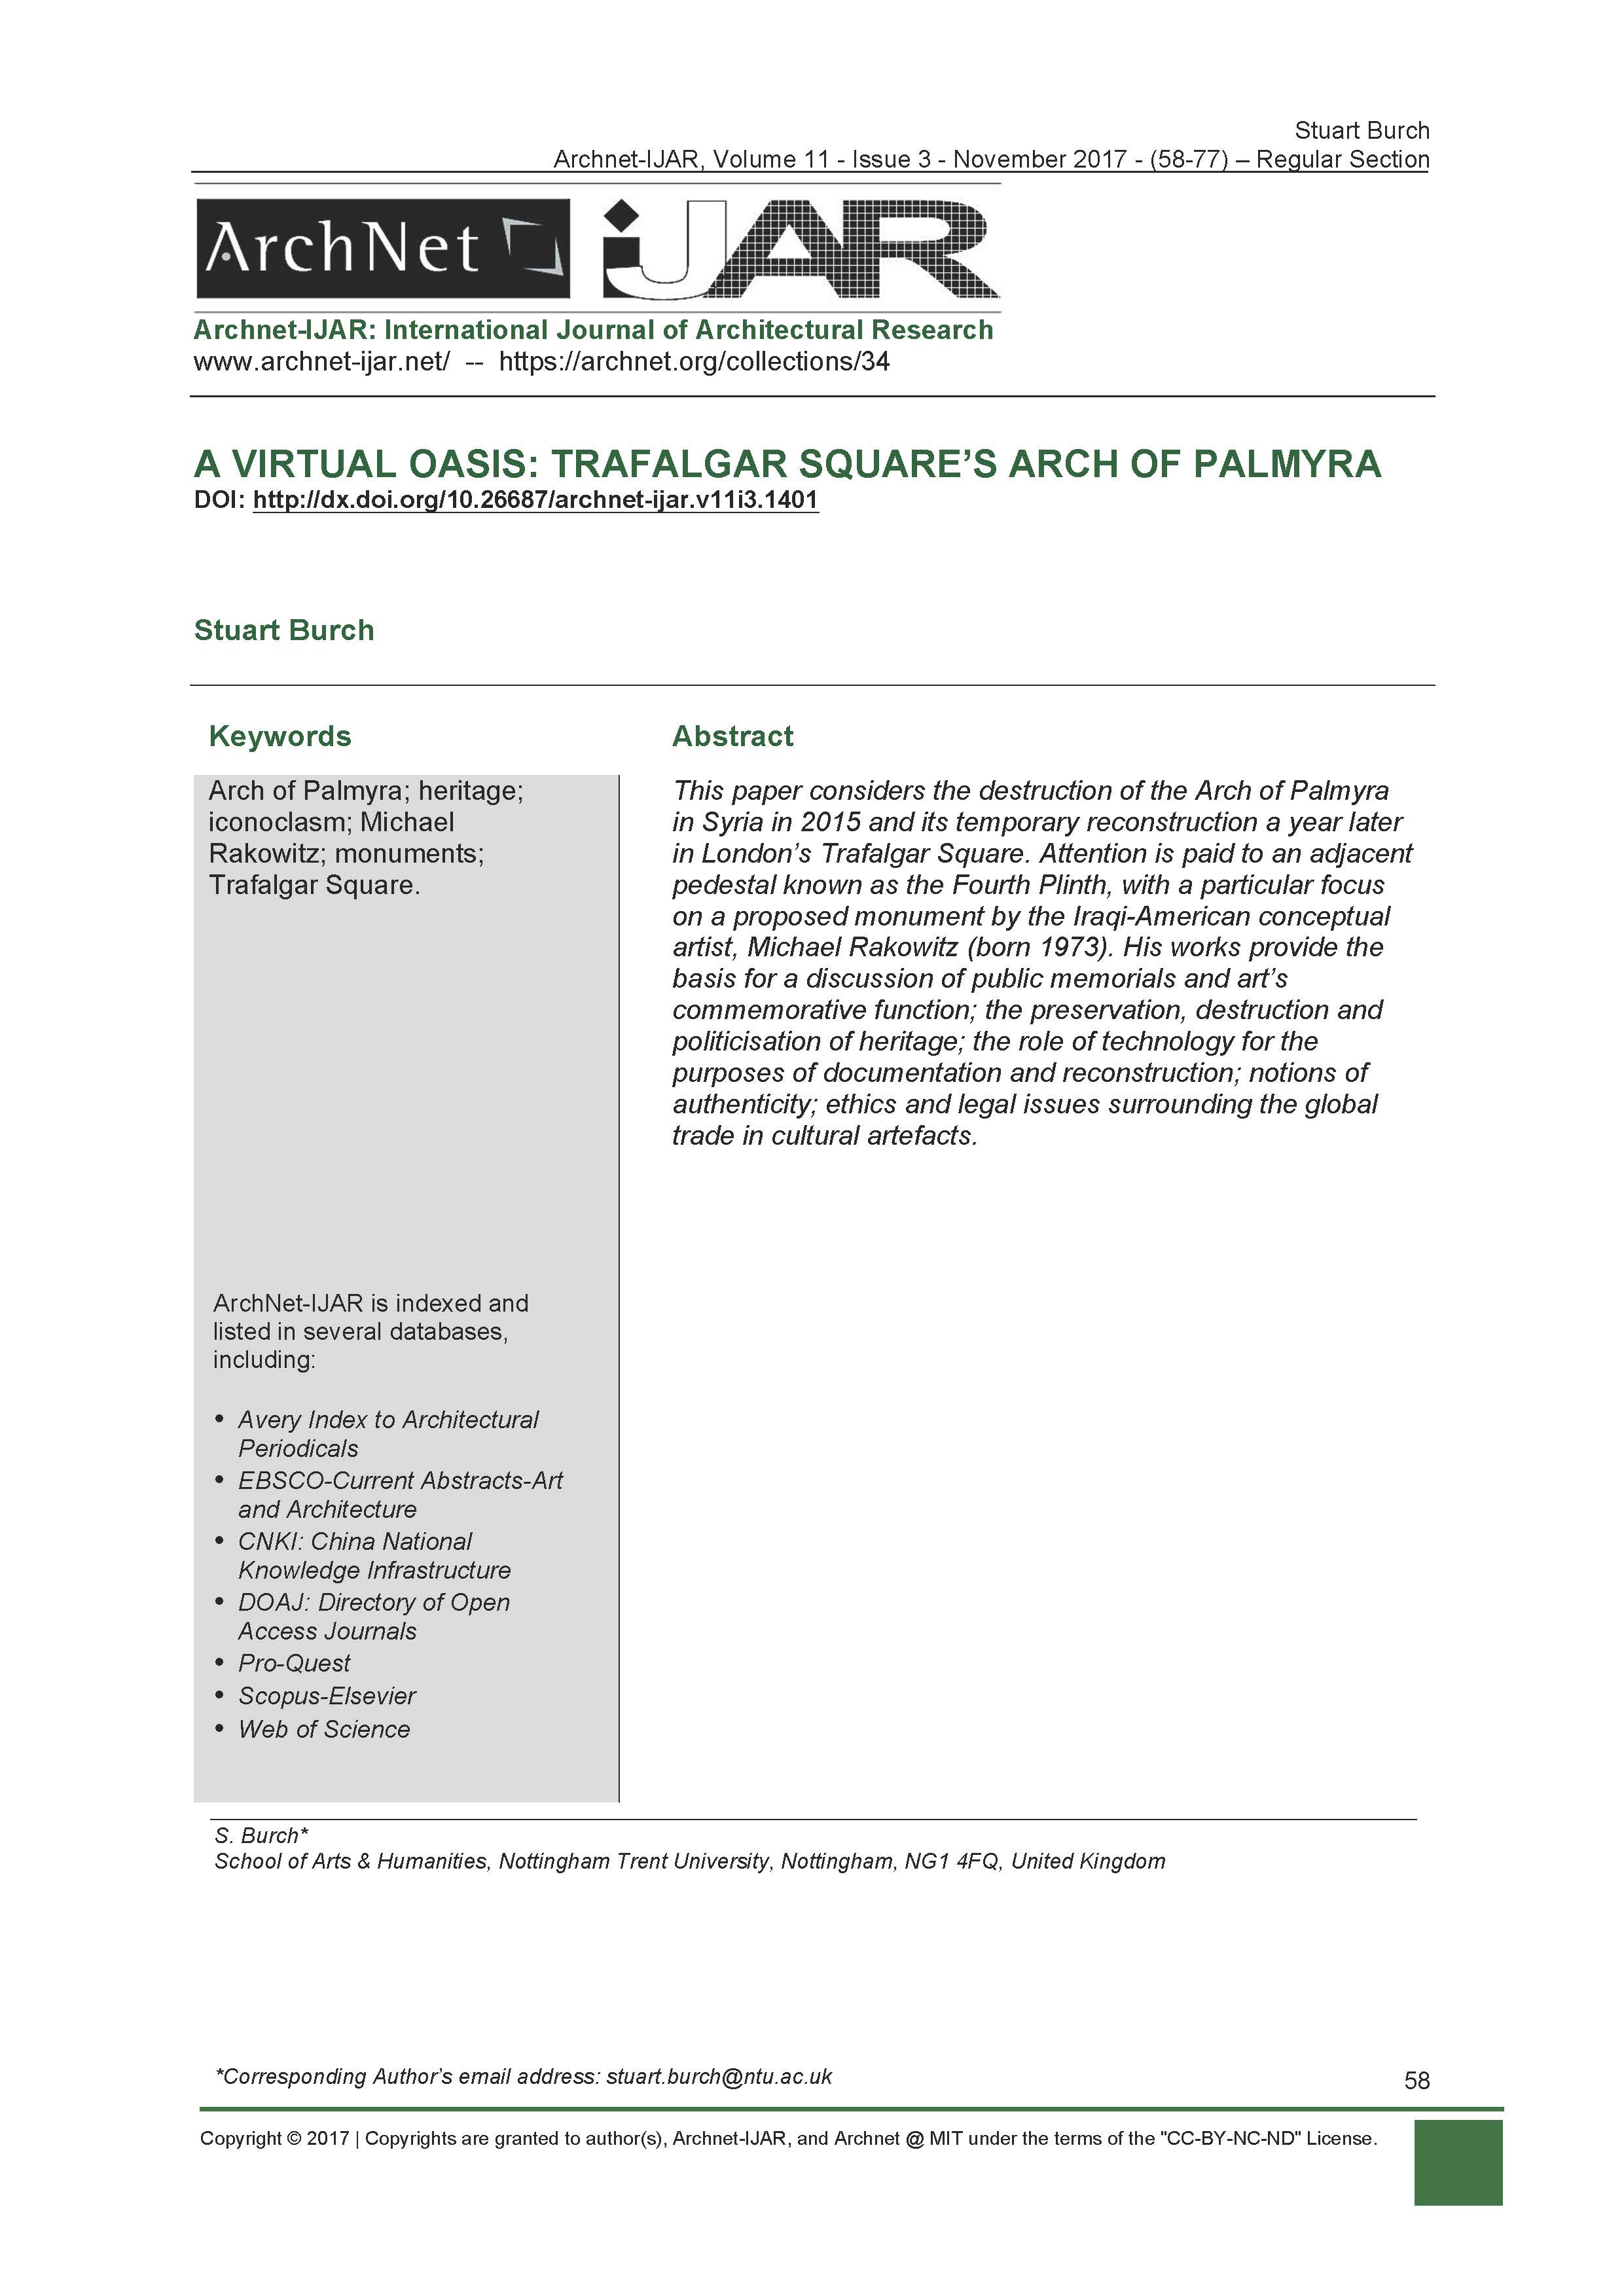 A Virtual Oasis: Trafalgar Square's Arch of Palymra